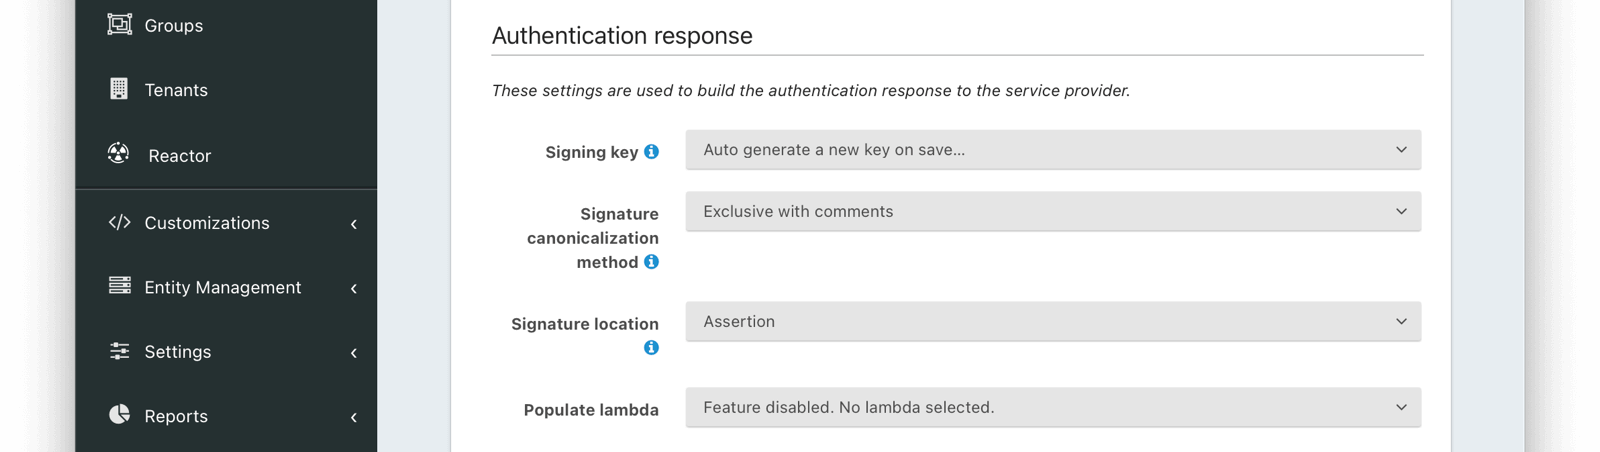 Application SAML authentication response settings